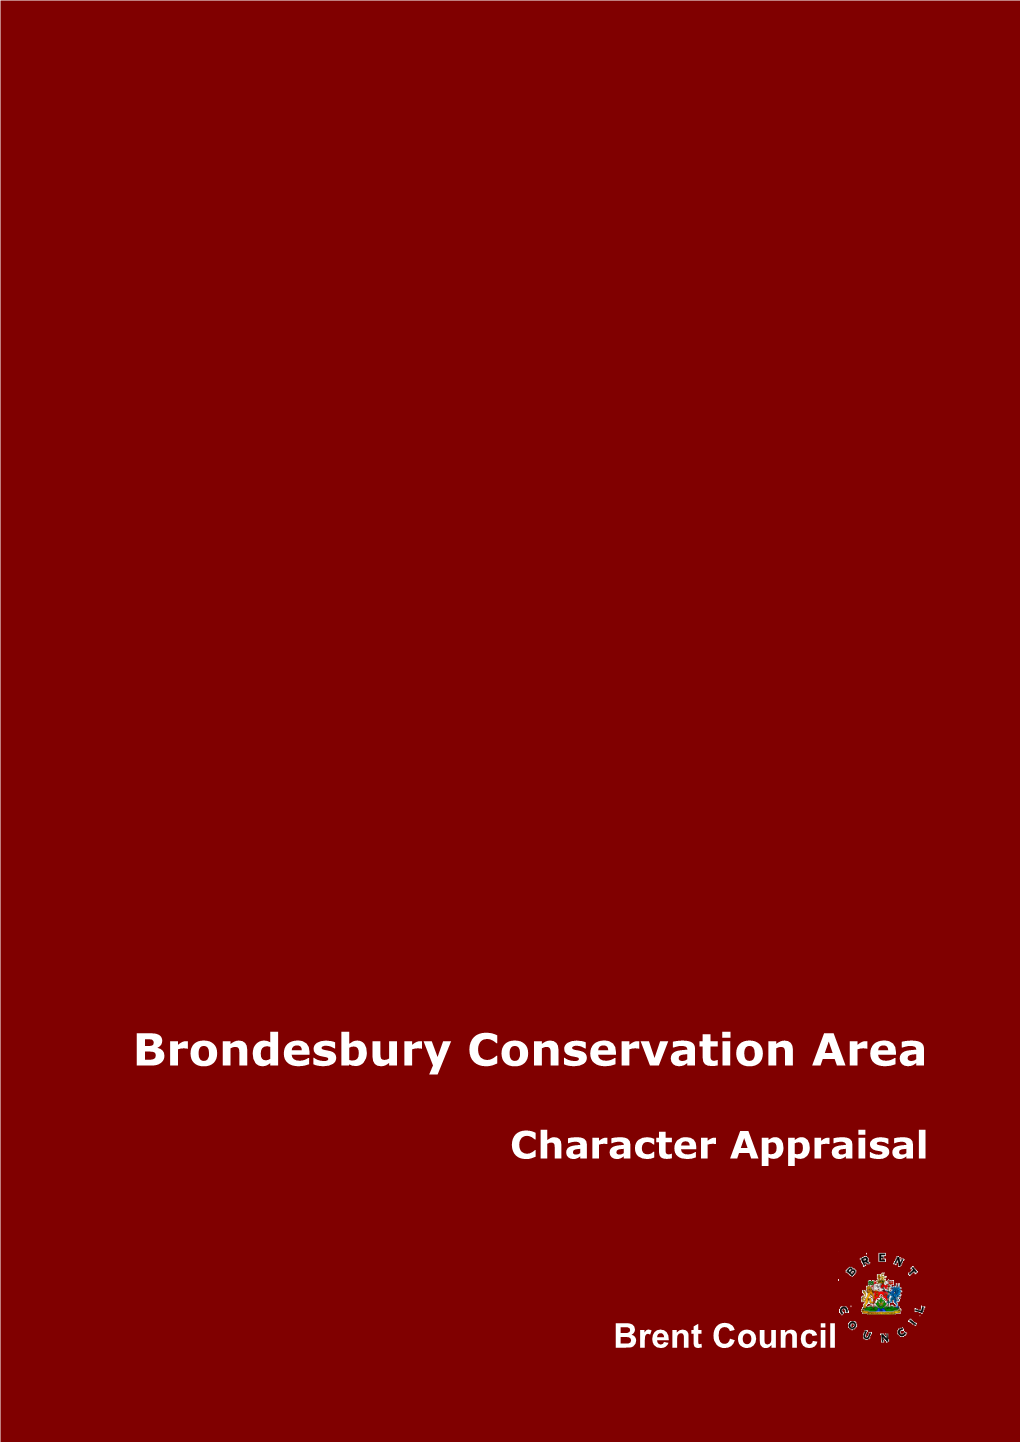 Brondesbury Conservation Area Appraisal